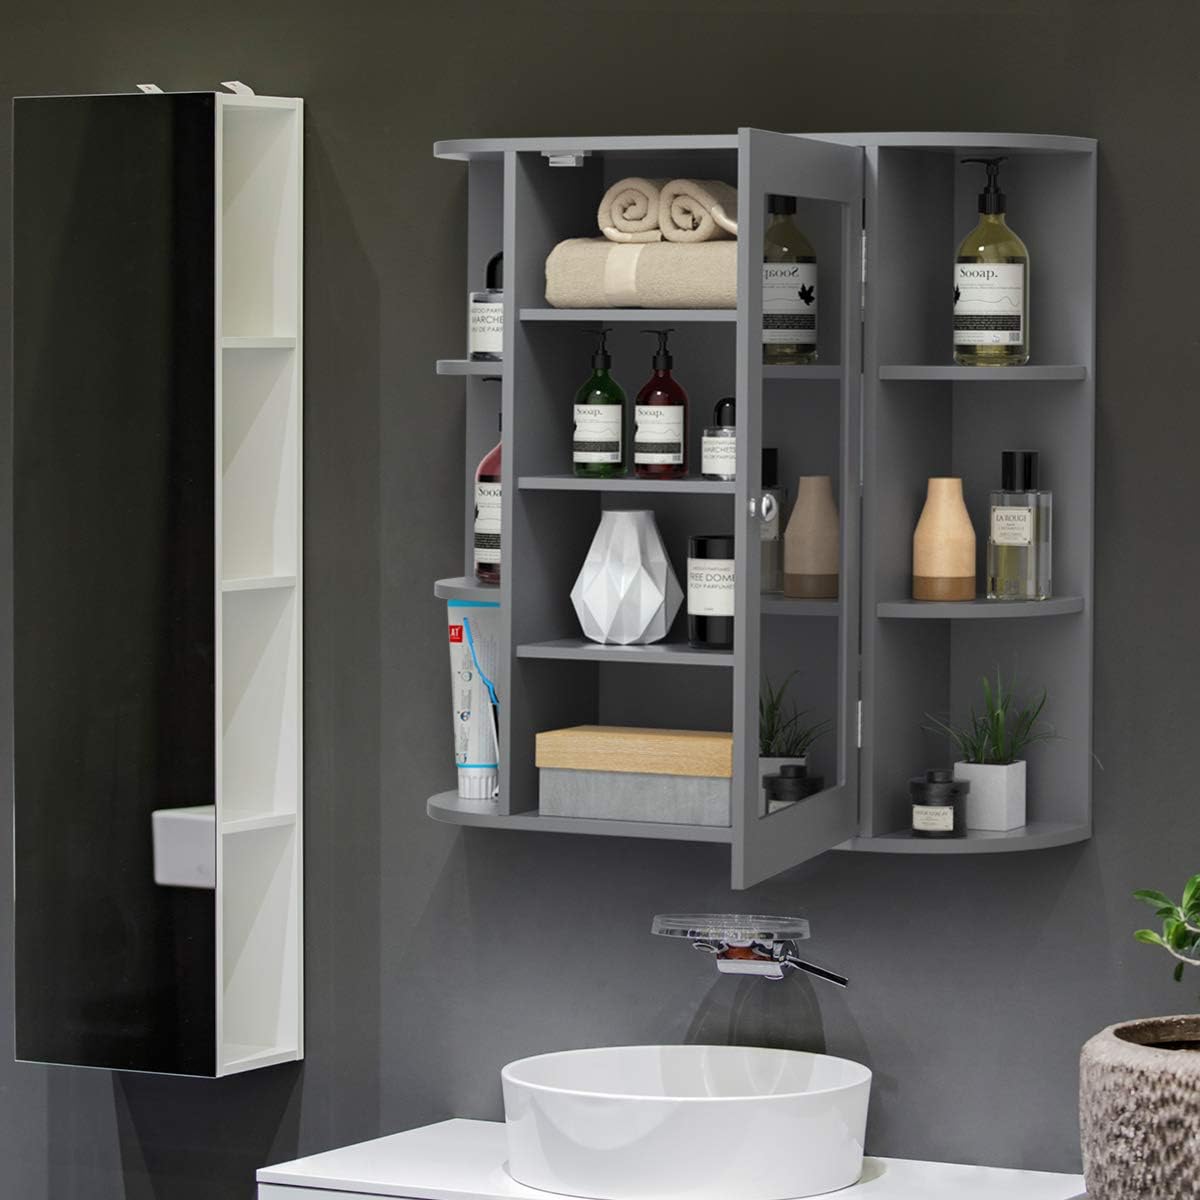 Tangkula Bathroom Medicine Cabinet With, Bathroom Wall Mount Medicine Cabinet Storage With Mirror Doors Shelf